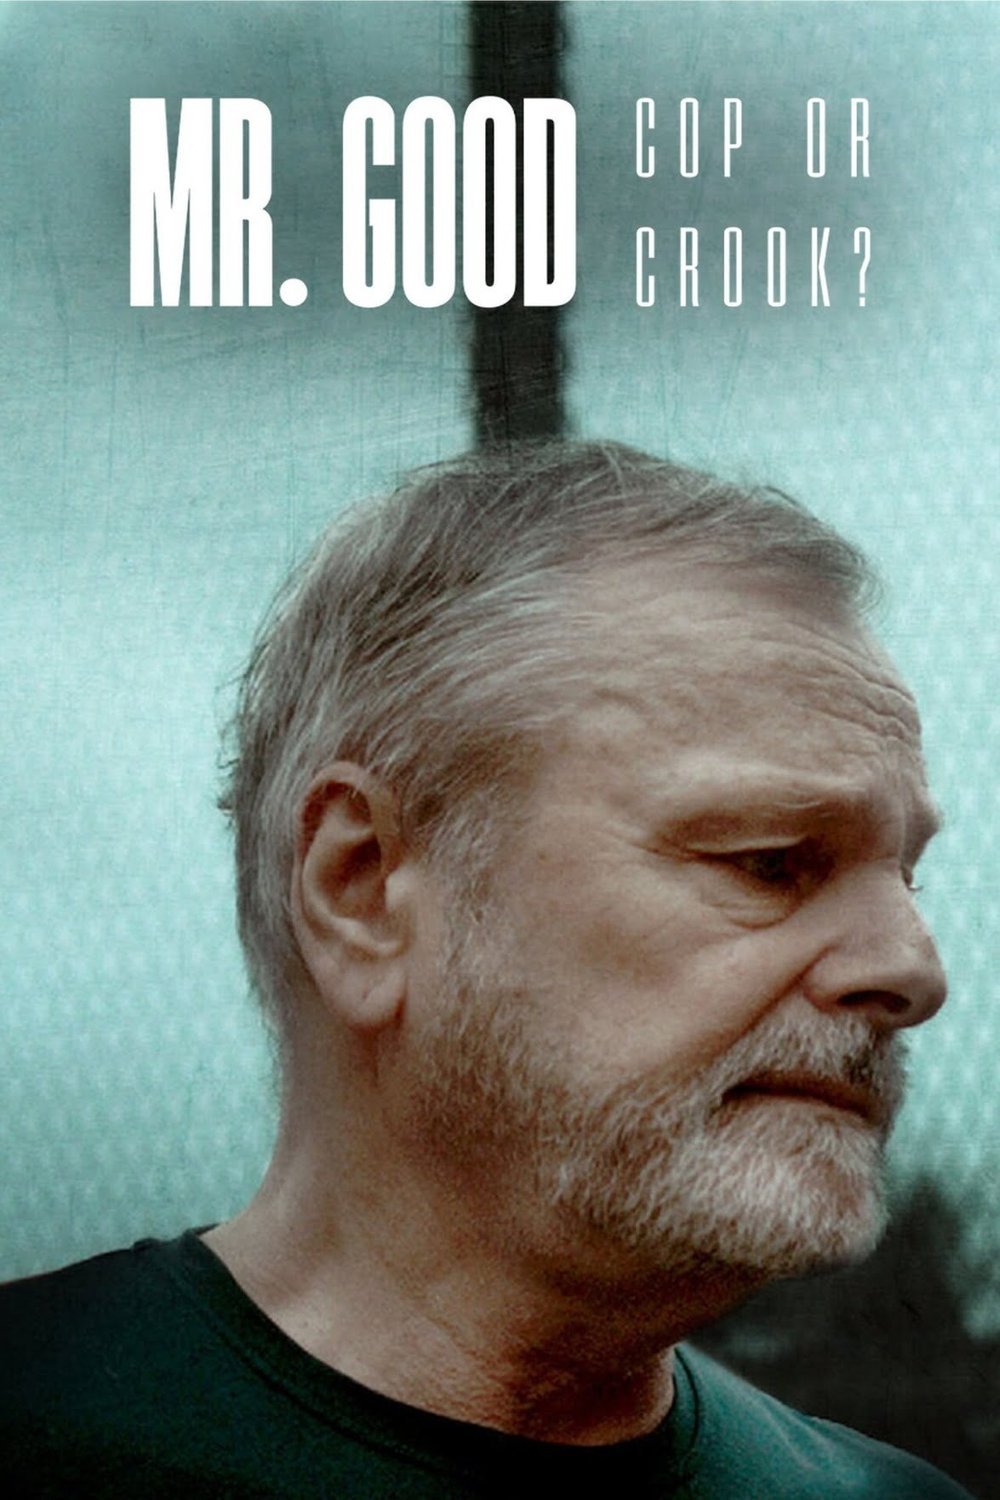 L'affiche originale du film Mr Good: Cop or Crook? en norvégien